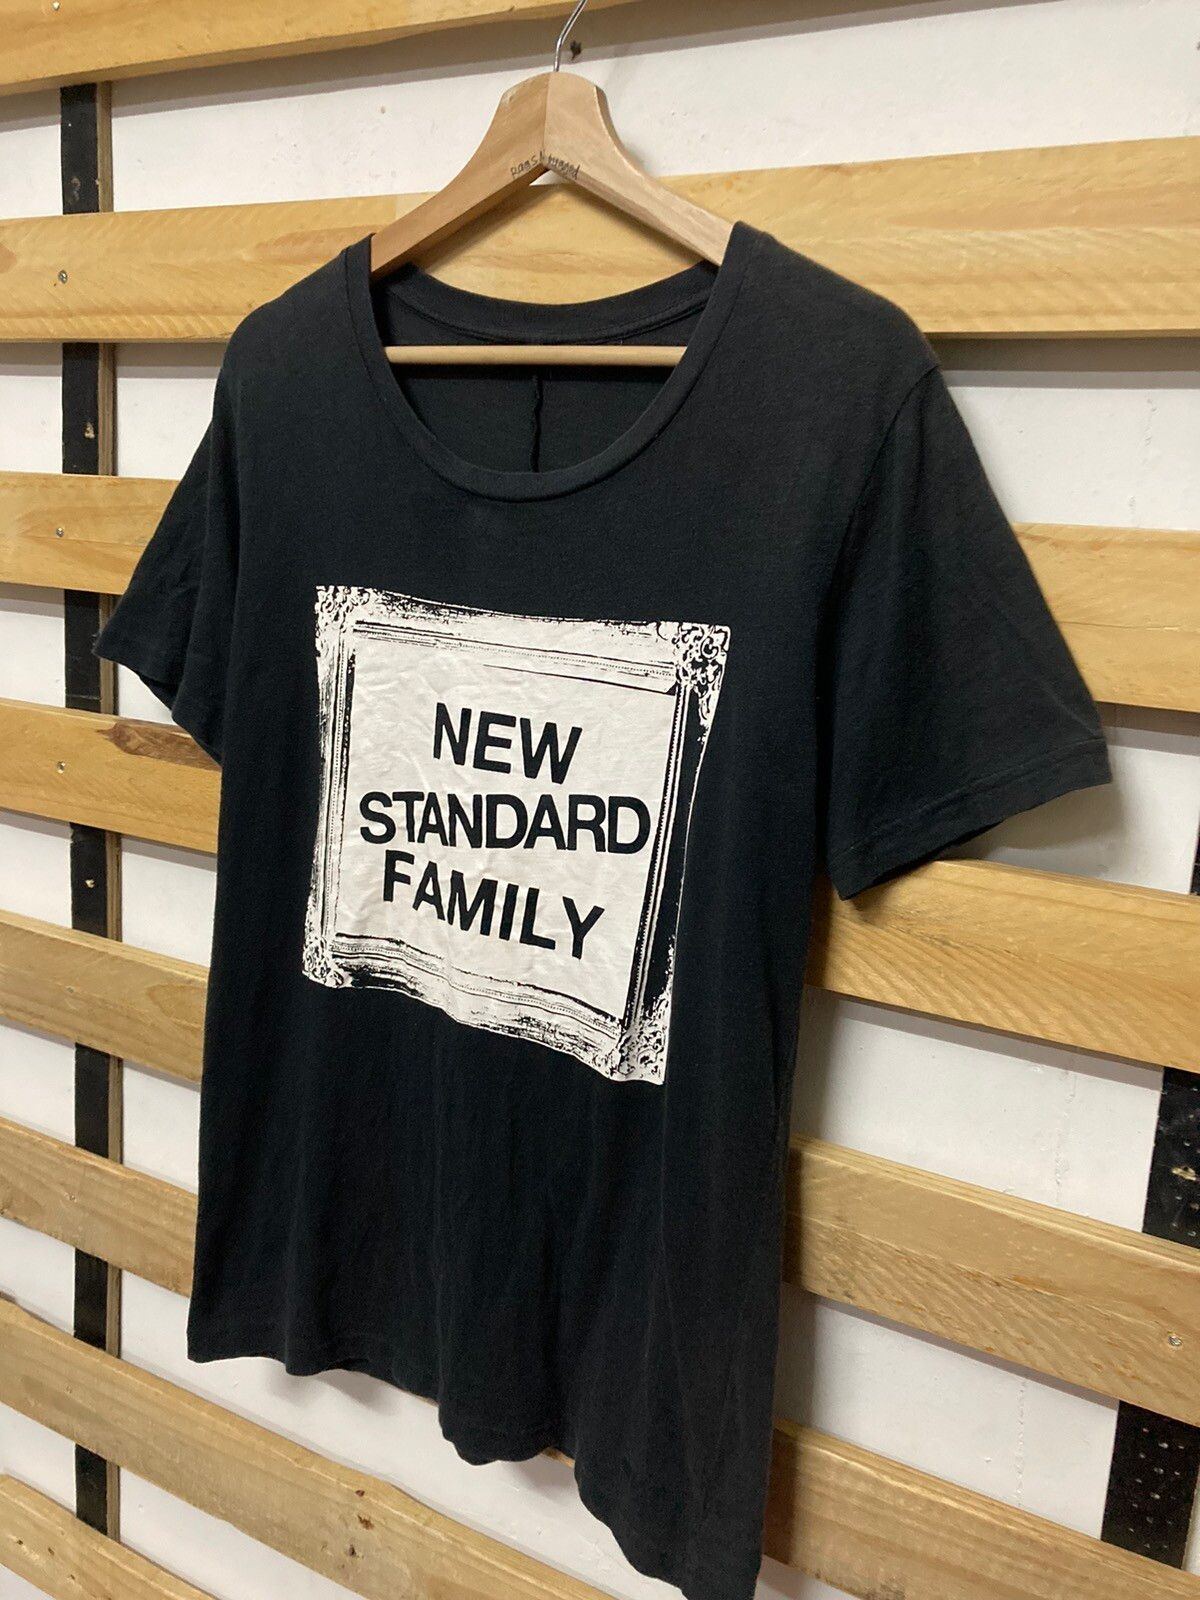 Uniqlo x Undercover New Standard Family Tshirt - 3